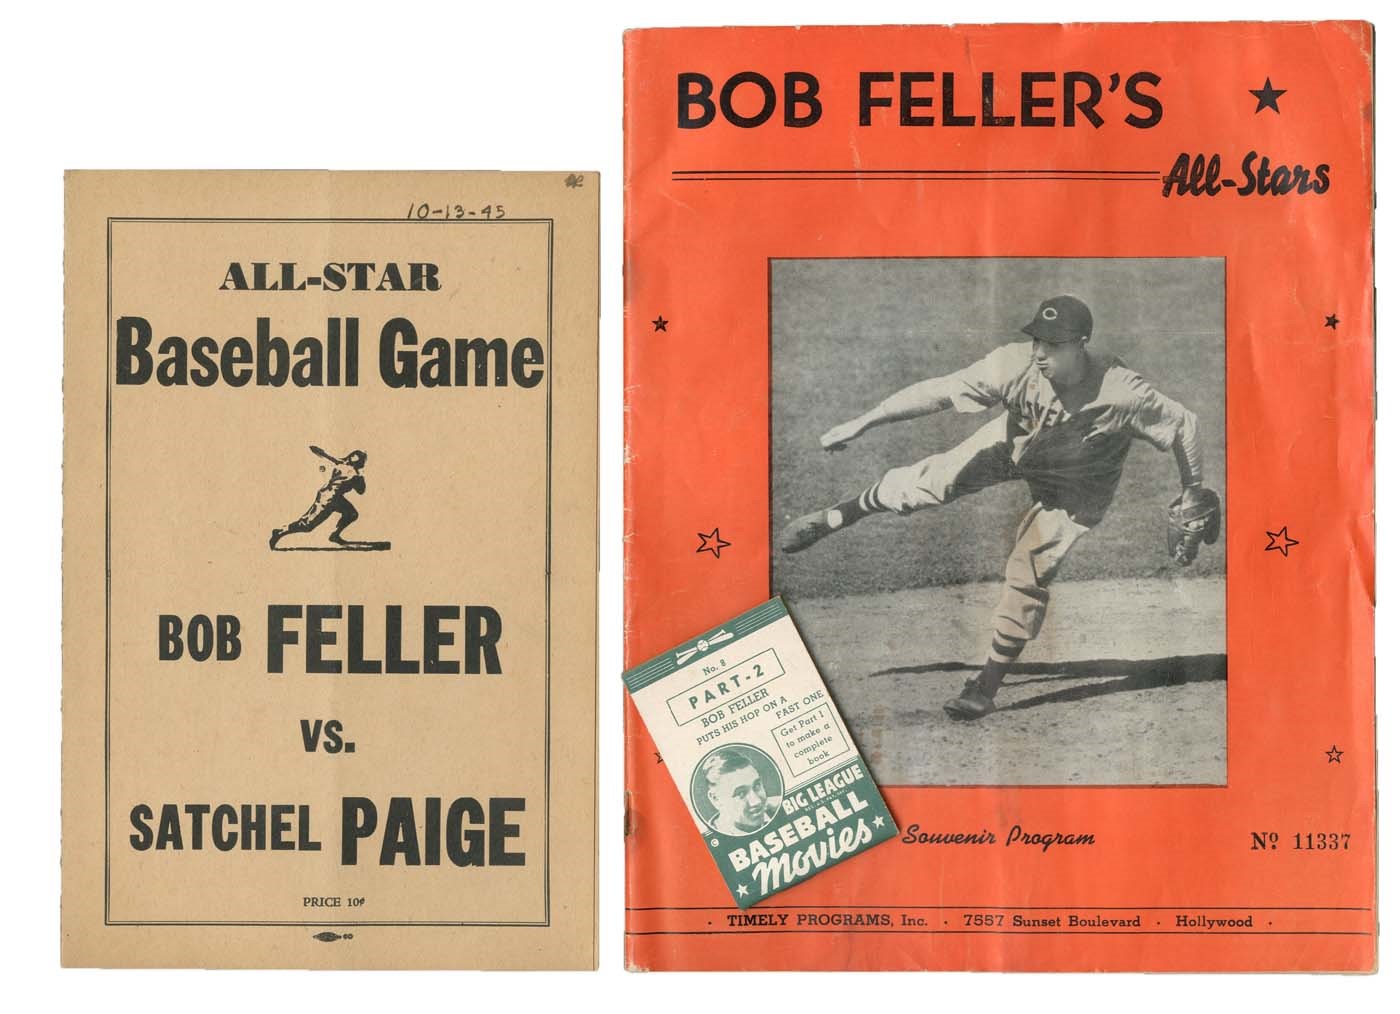 Cleveland Indians - 1945-46 Bob Feller All-Stars Programs and Flip Book